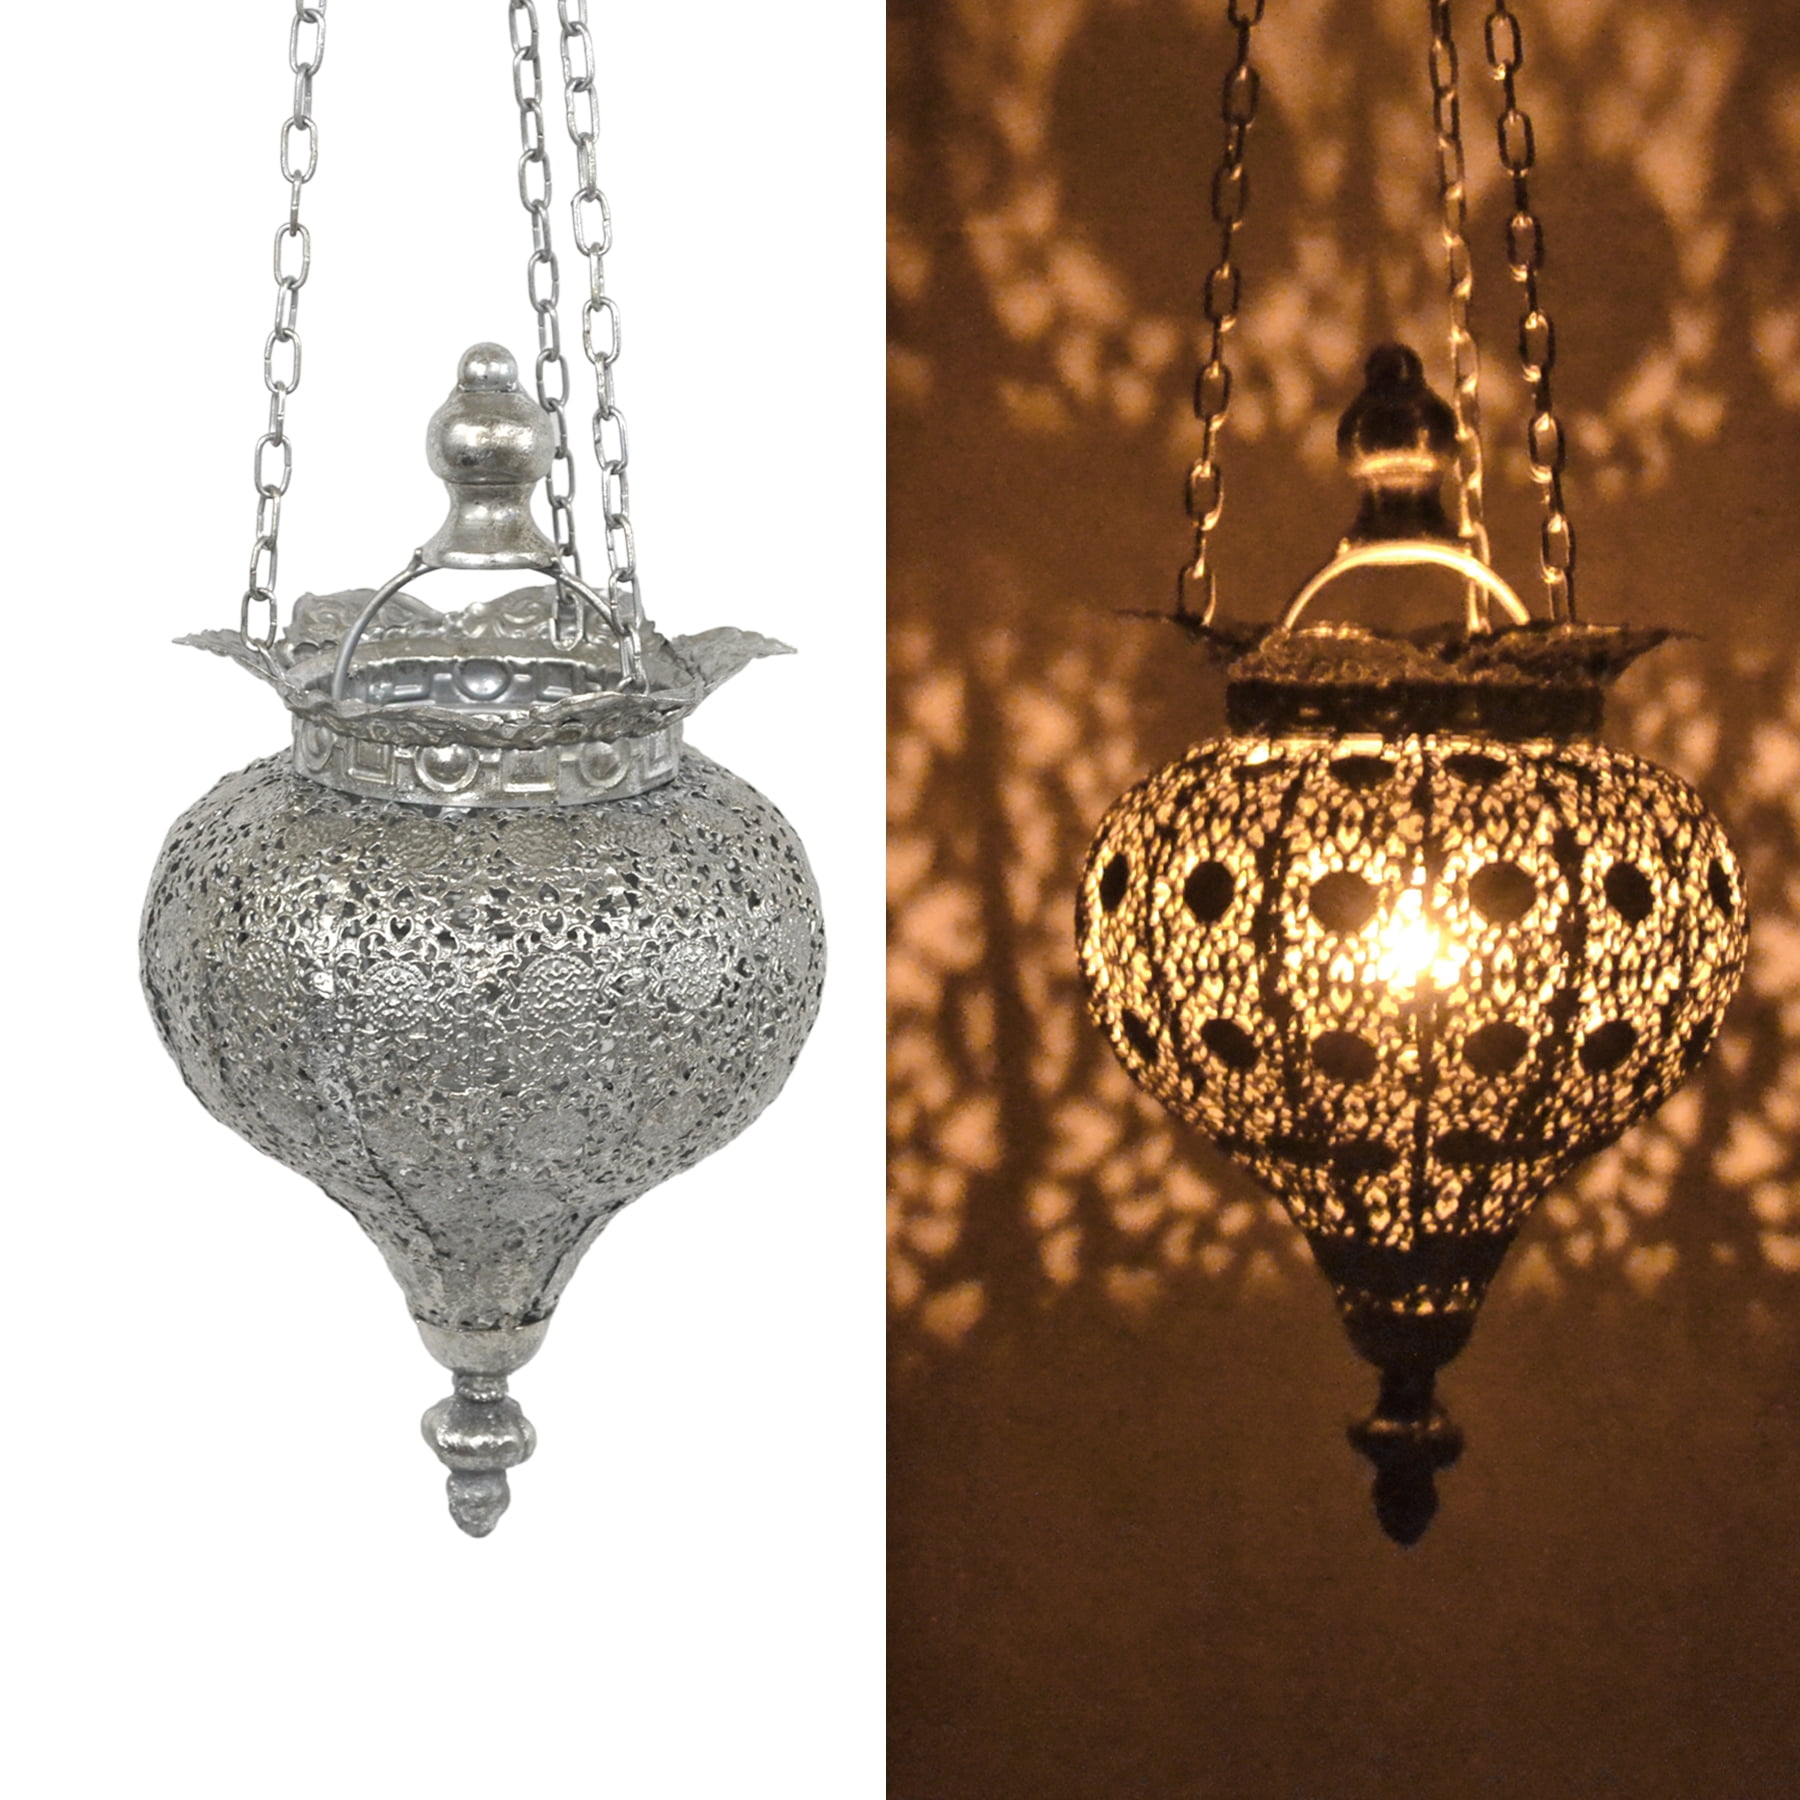 Westcharm Antique Silver Oriental Moroccan Ramadan Candle Lantern  Decorative Metal Hanging Pendant Light - Small